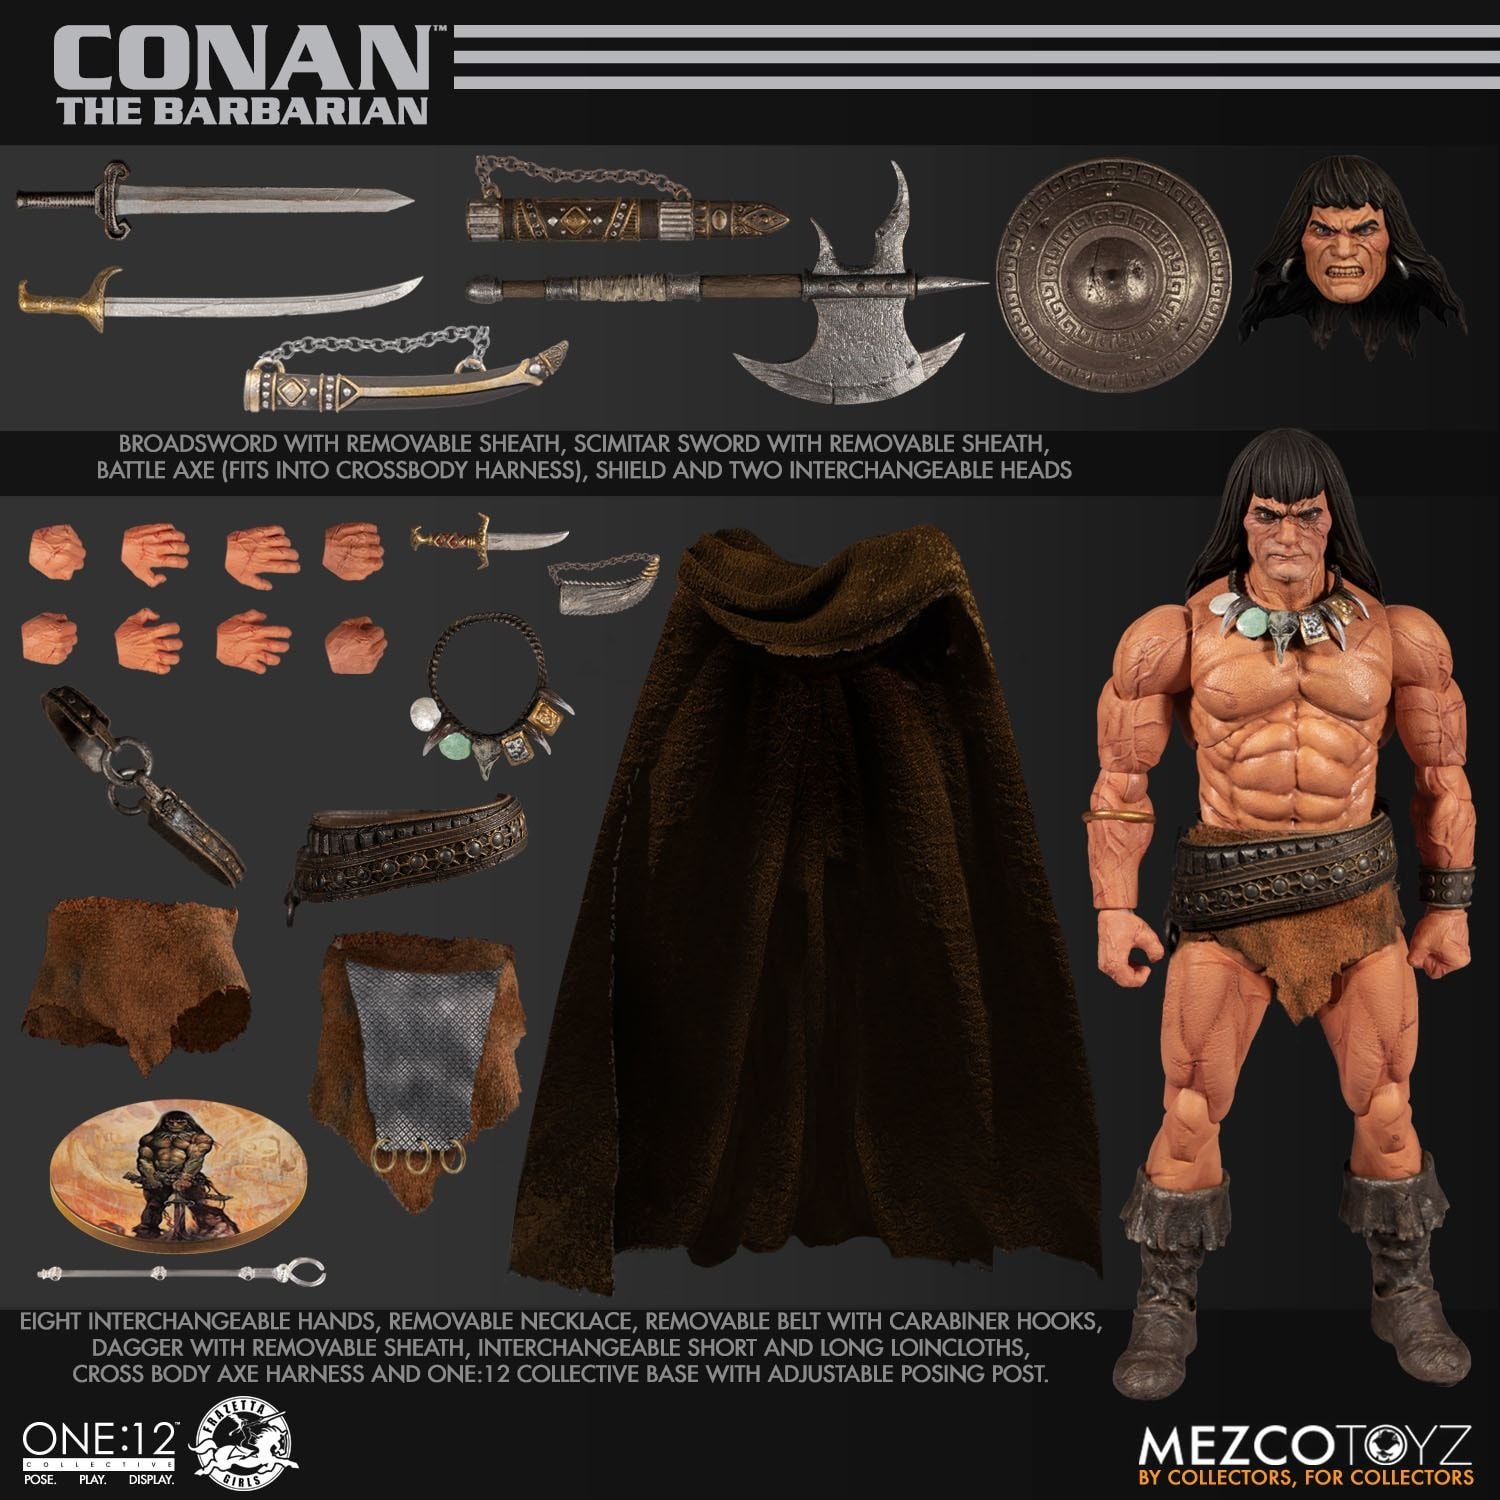 One:12 Collective Conan The Barbarian